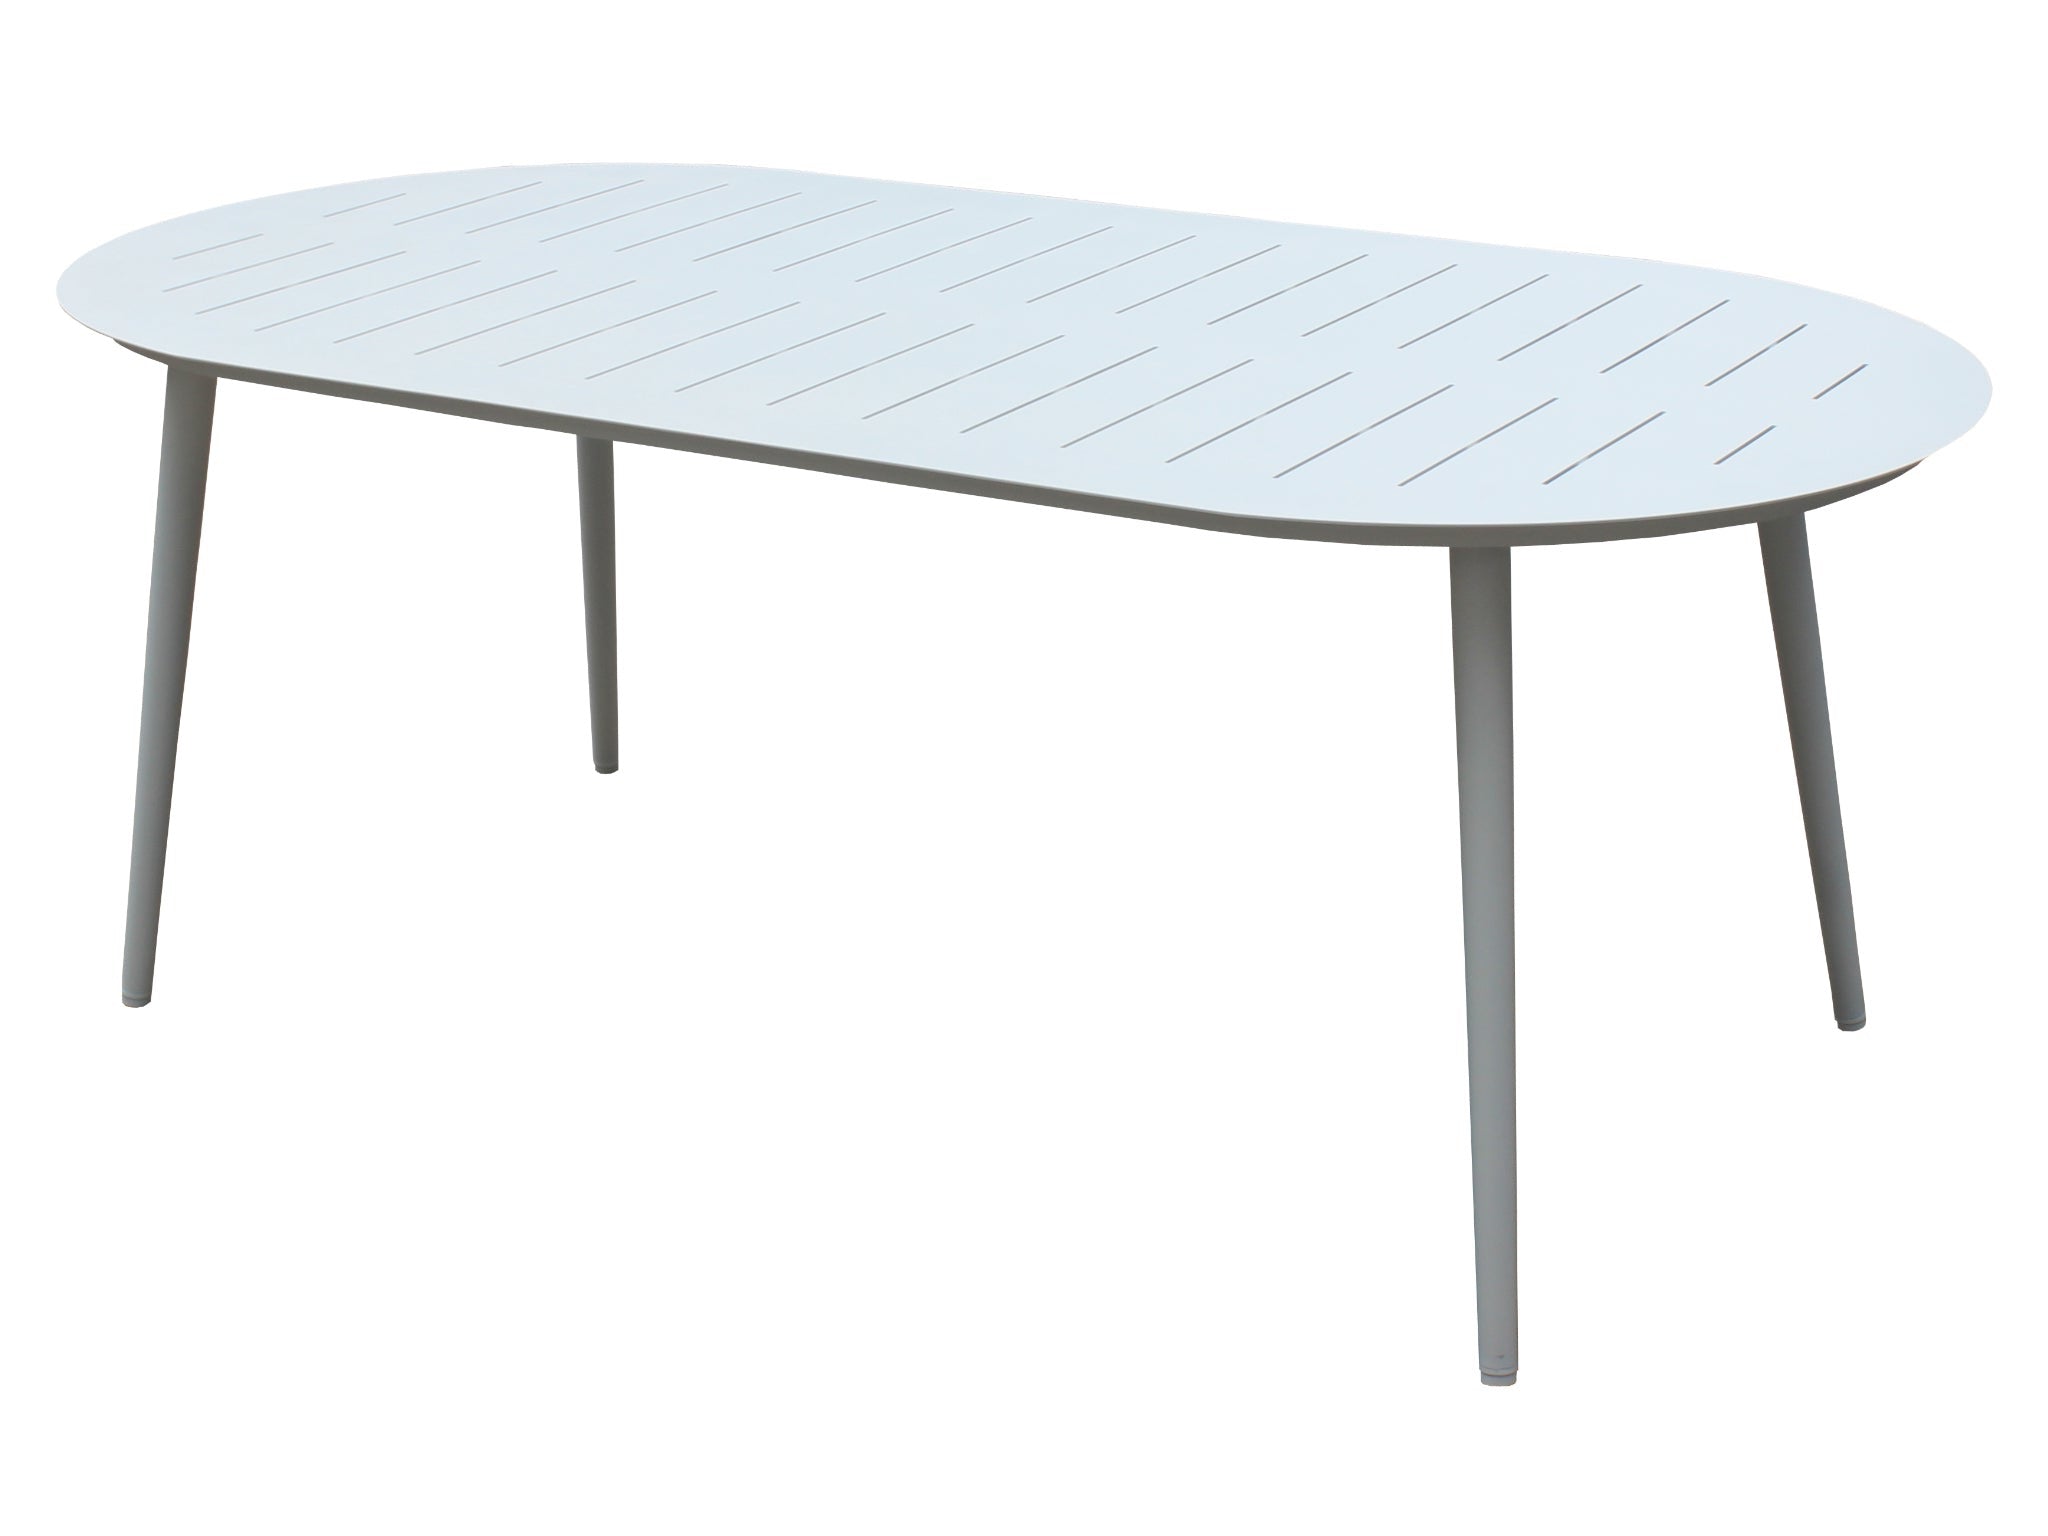 FurnitureOkay Cove Aluminium Outdoor Dining Table (200x100cm Oval)